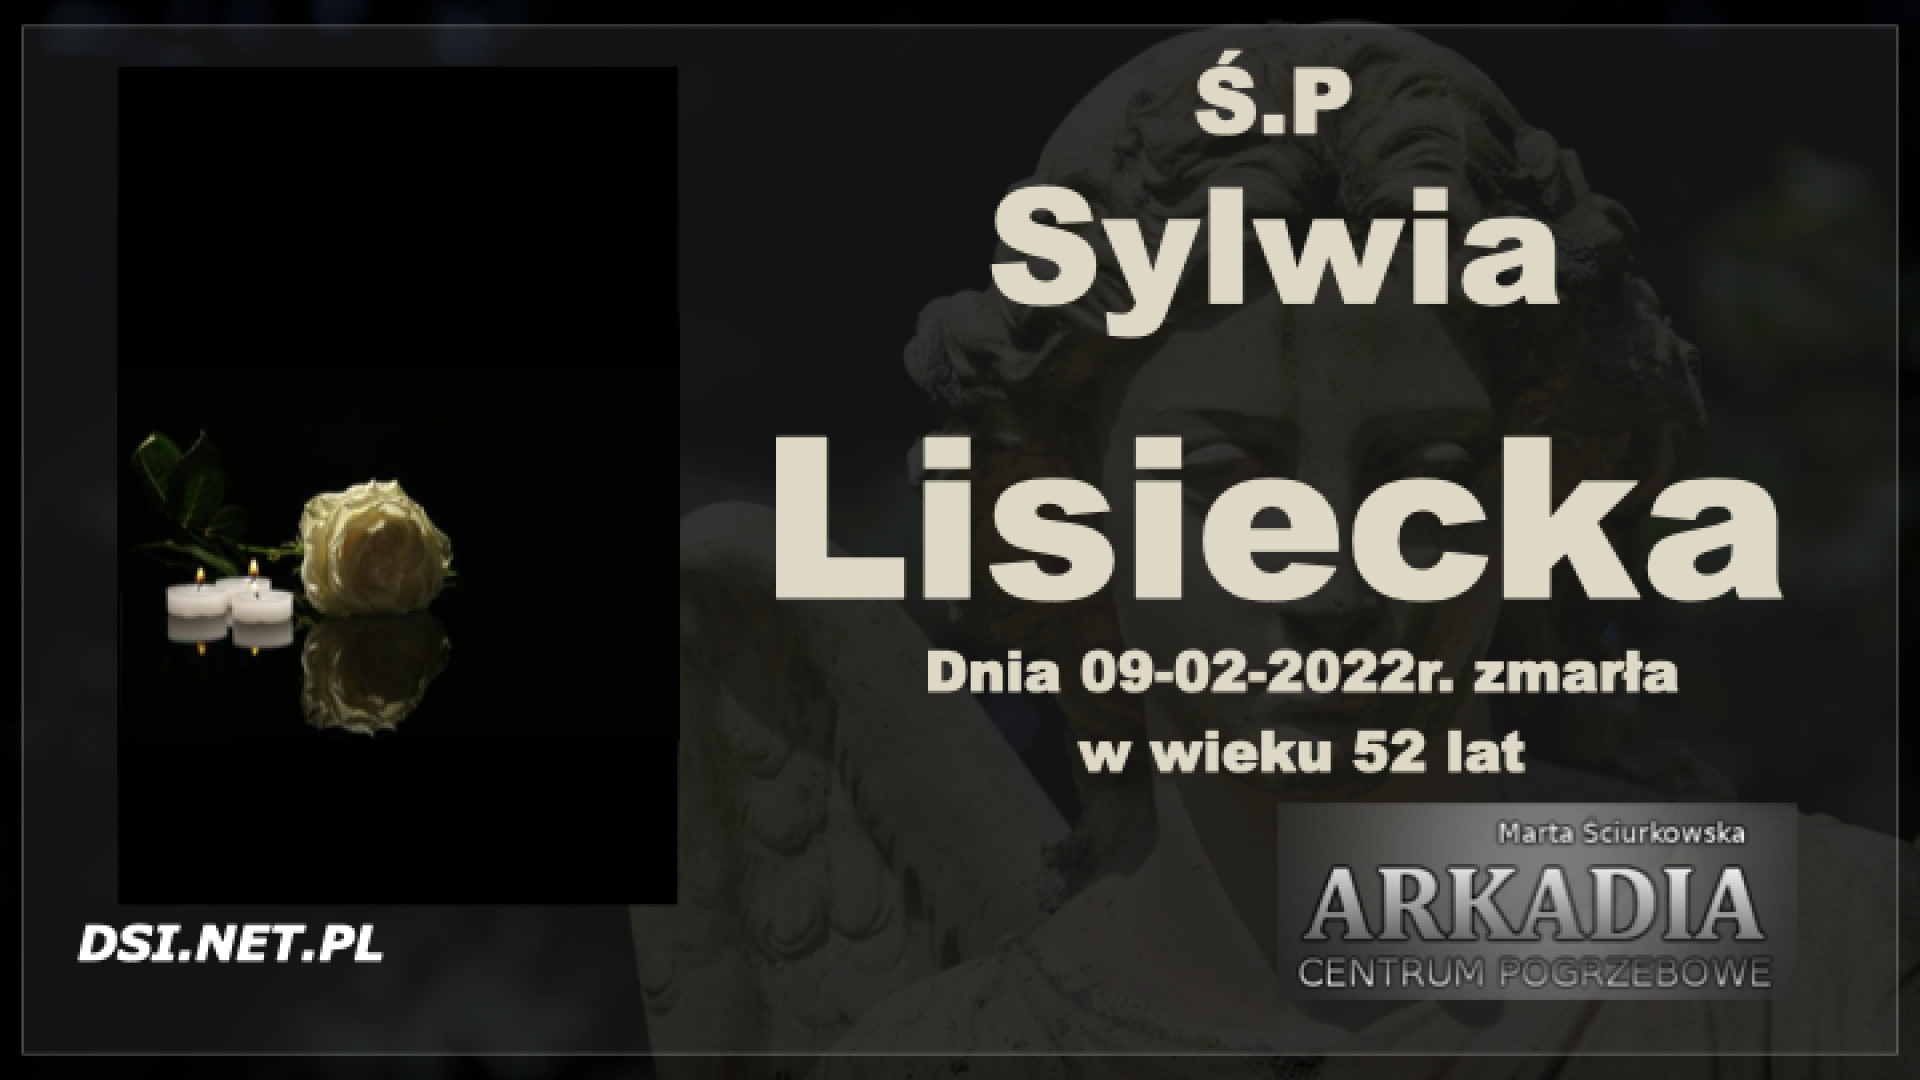 Ś.P. Sylwia Lisiecka